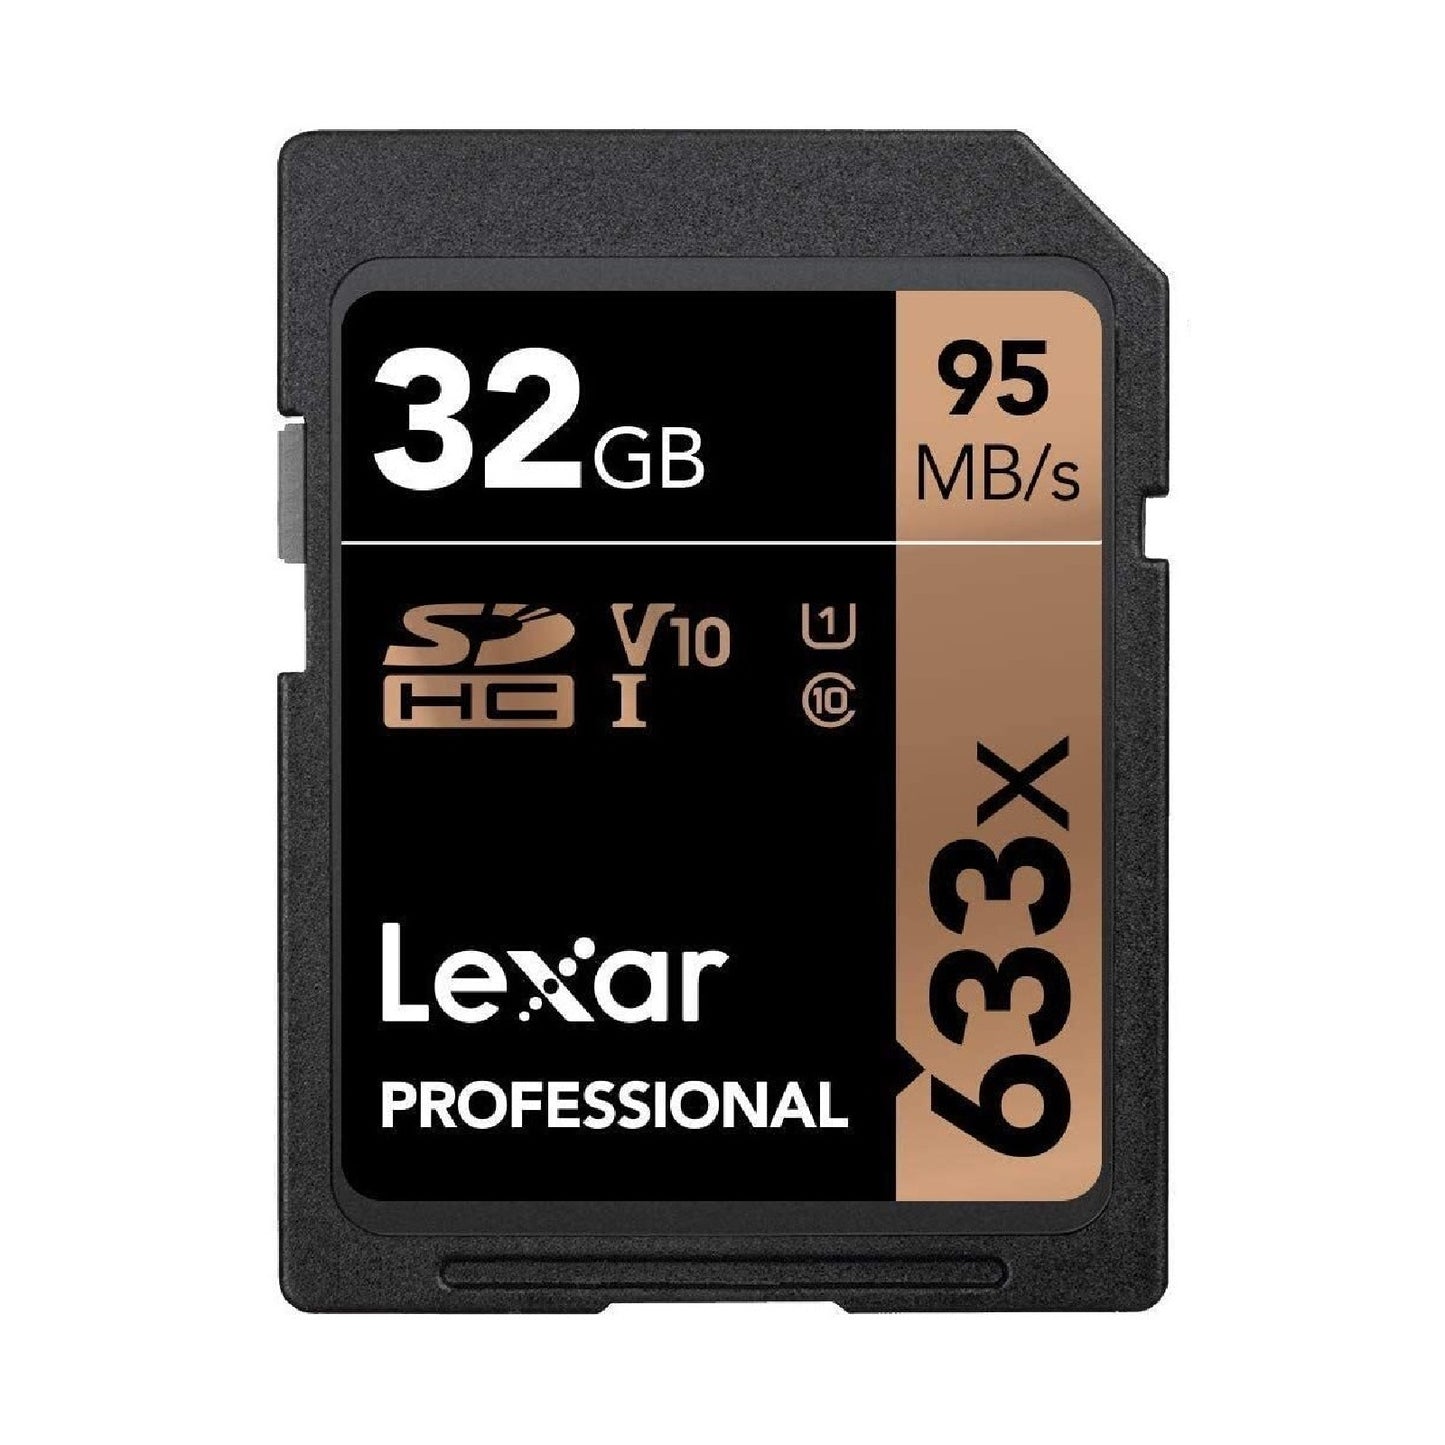 Lexar Professional 32GB SDHC 95MB/s SD Camera Memory TF Card 4K Video DSLR